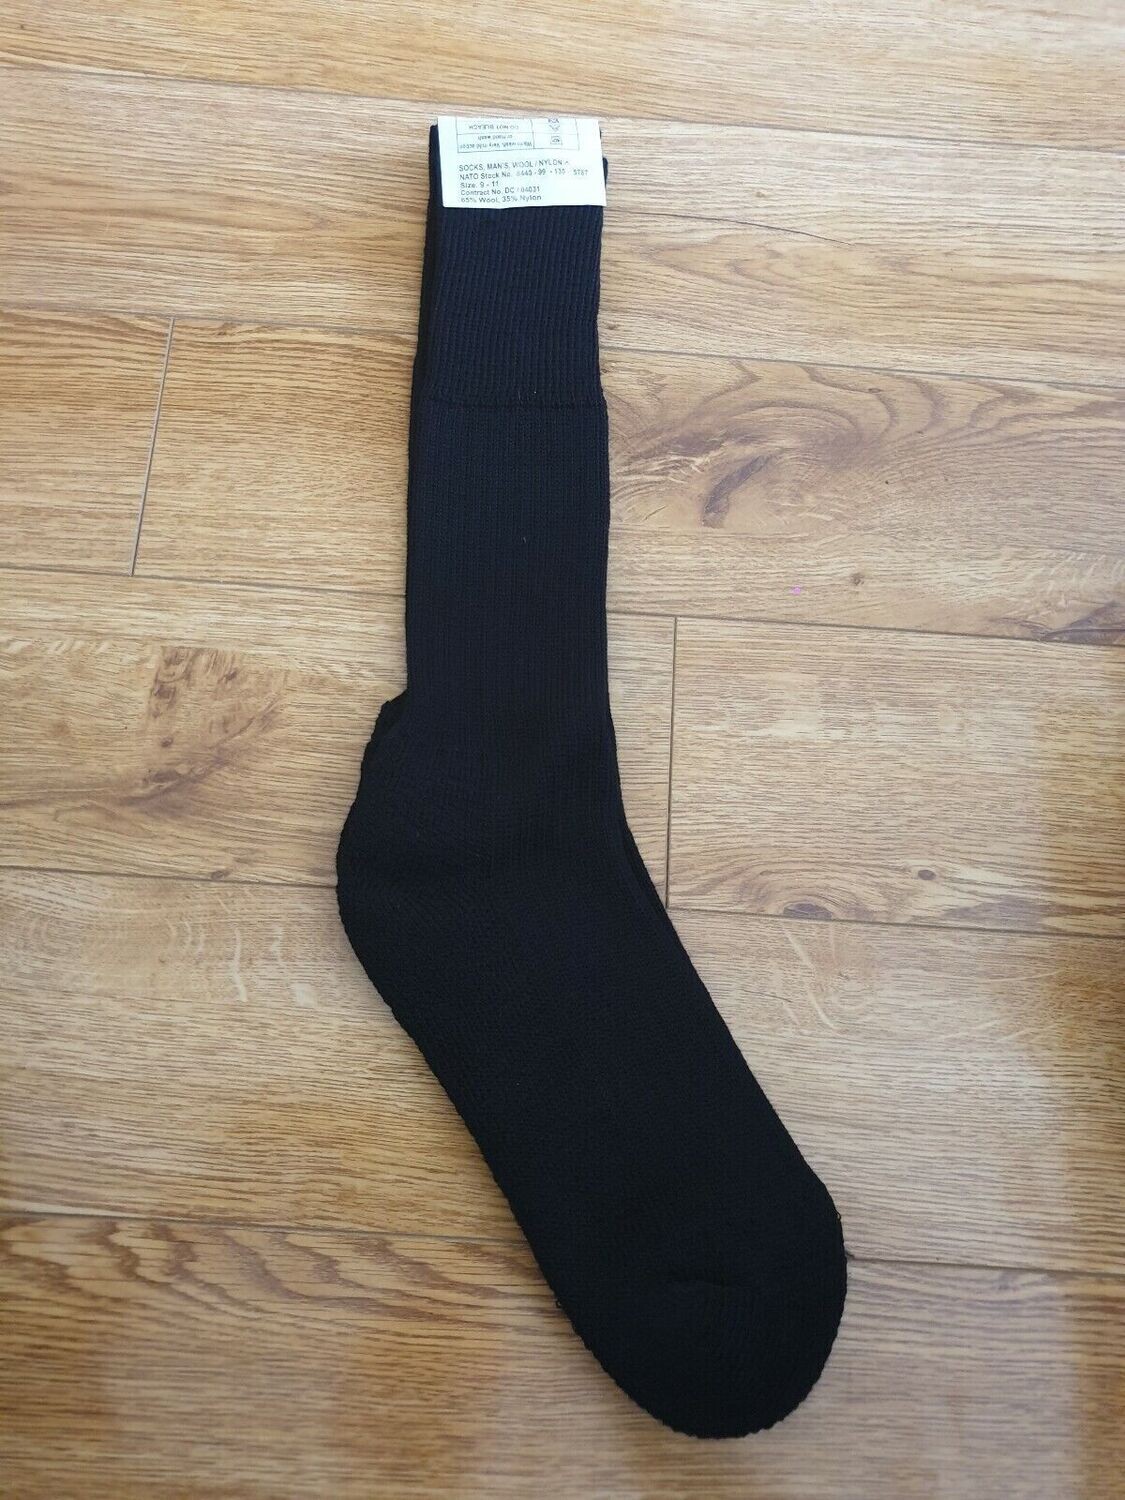 Genuine British Army General Issue Black Double Knit New Black Socks